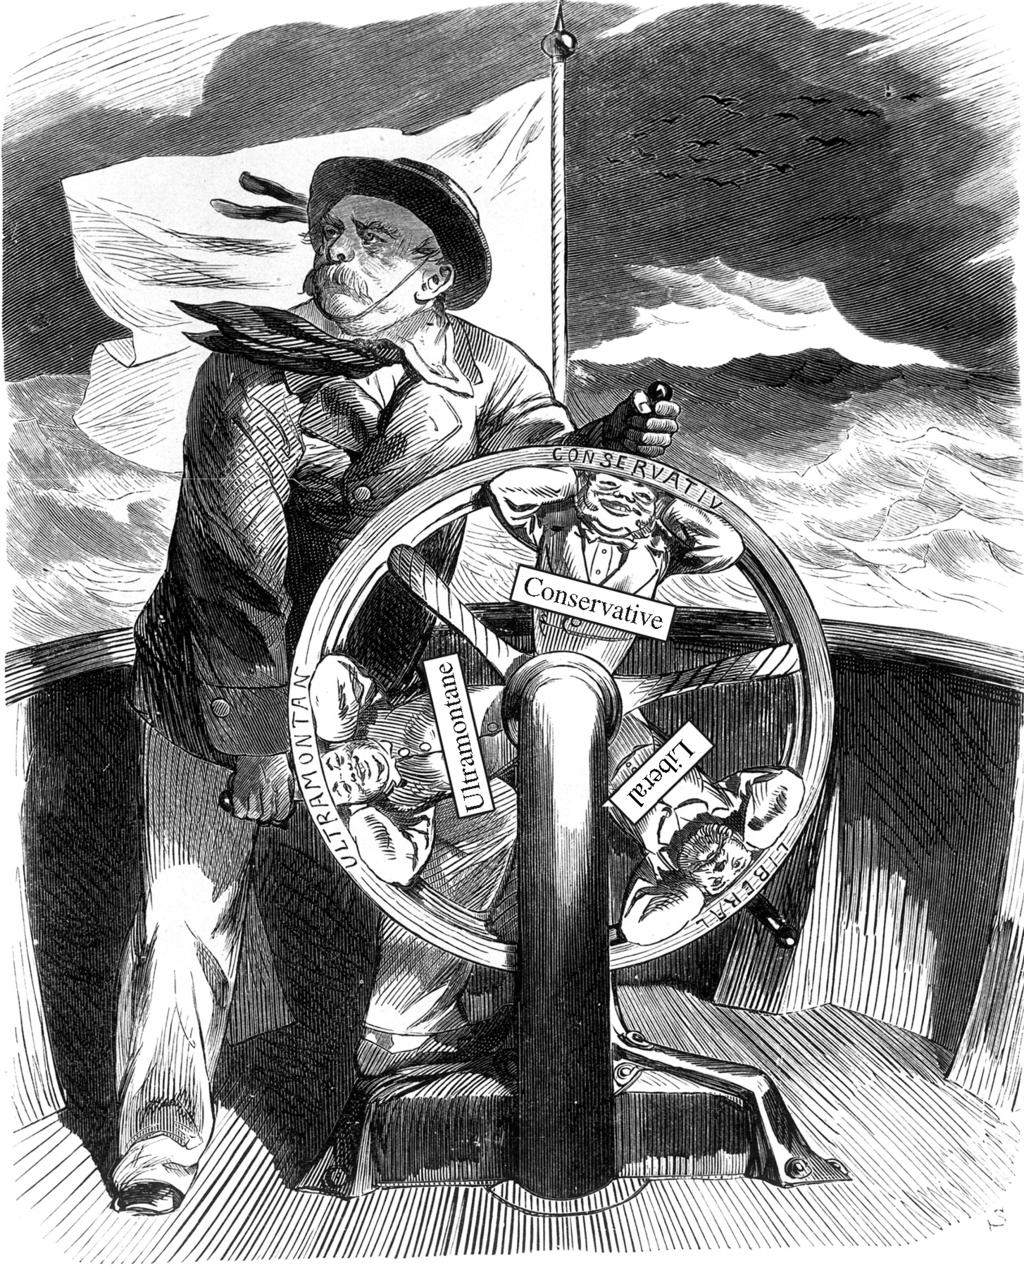 Document 4 Source: At the helm, political cartoon portraying Bismarck, published in a satirical German magazine, 1879 bpk, Berlin / Dietmar Katz